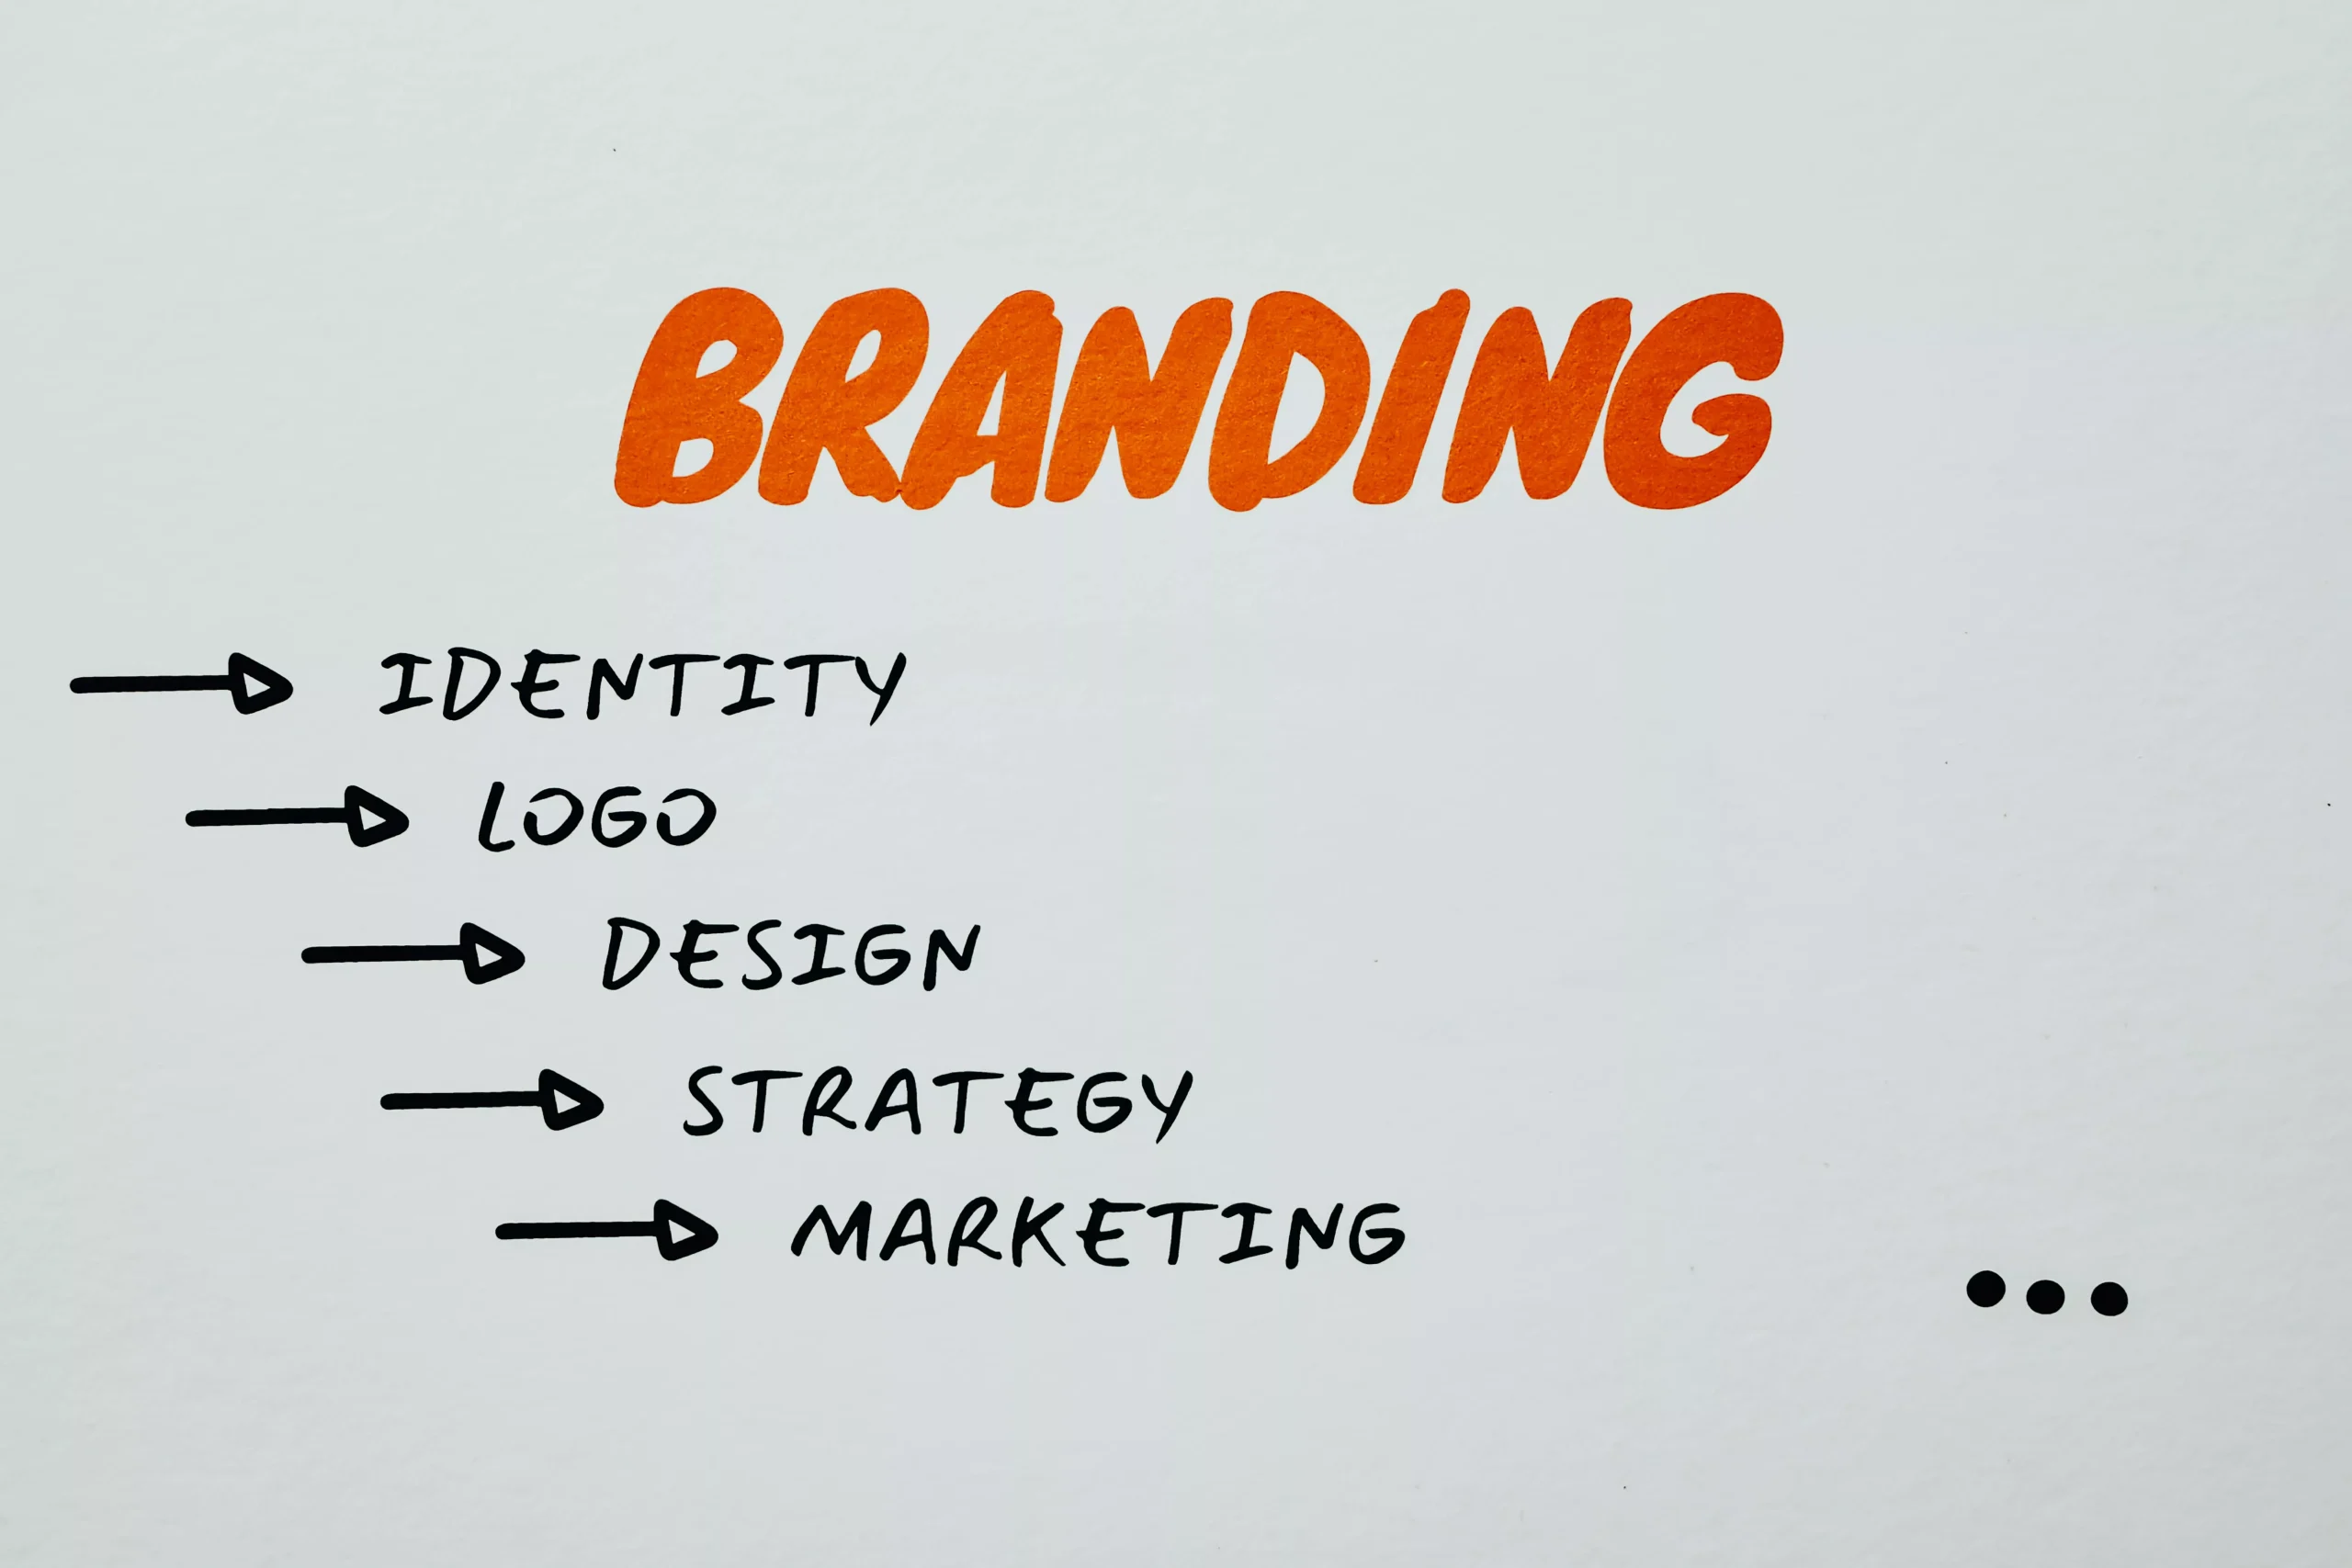 brand marketing vs content marketing